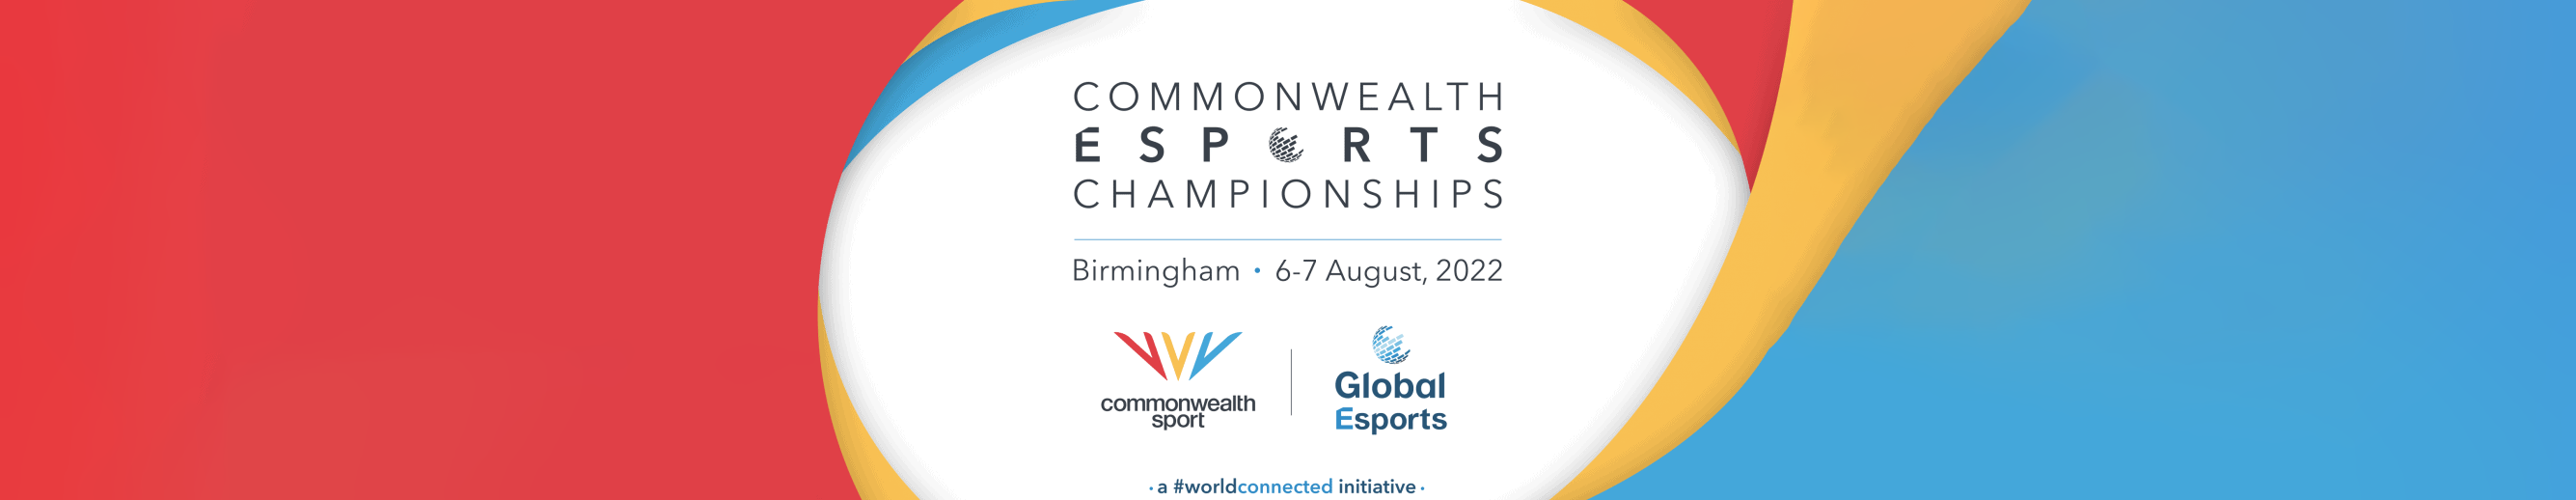 Commonwealth-Esports-Championships-Birmingham-2022